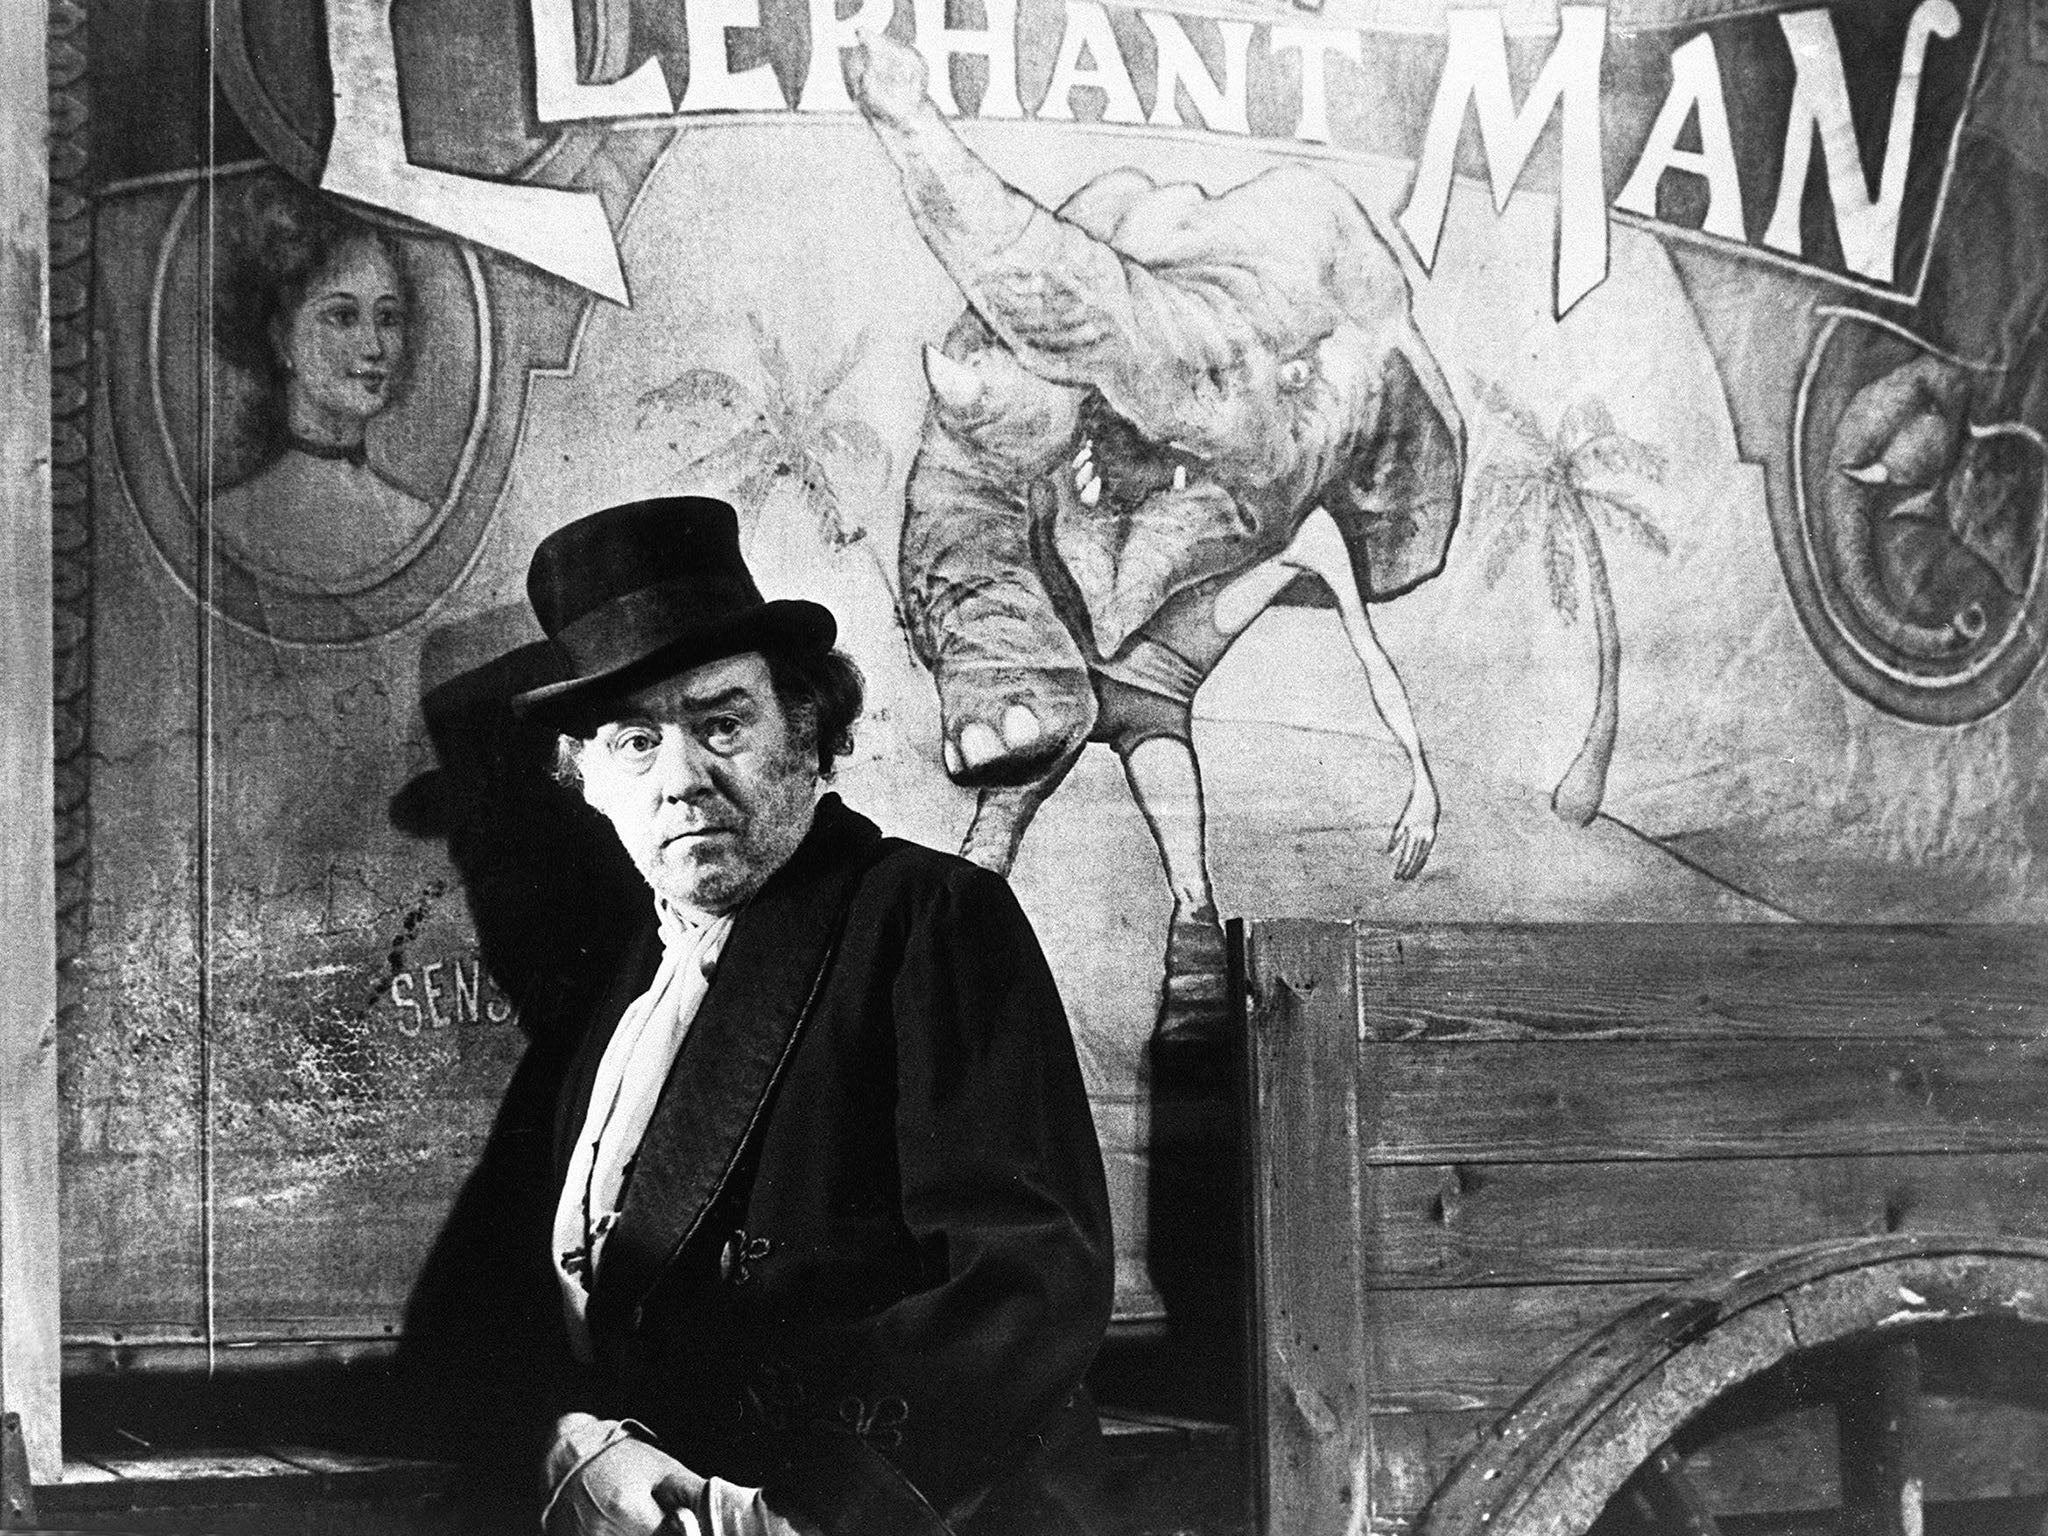 Jones was a revelation in David Lynch’s ‘The Elephant Man’ (1980)